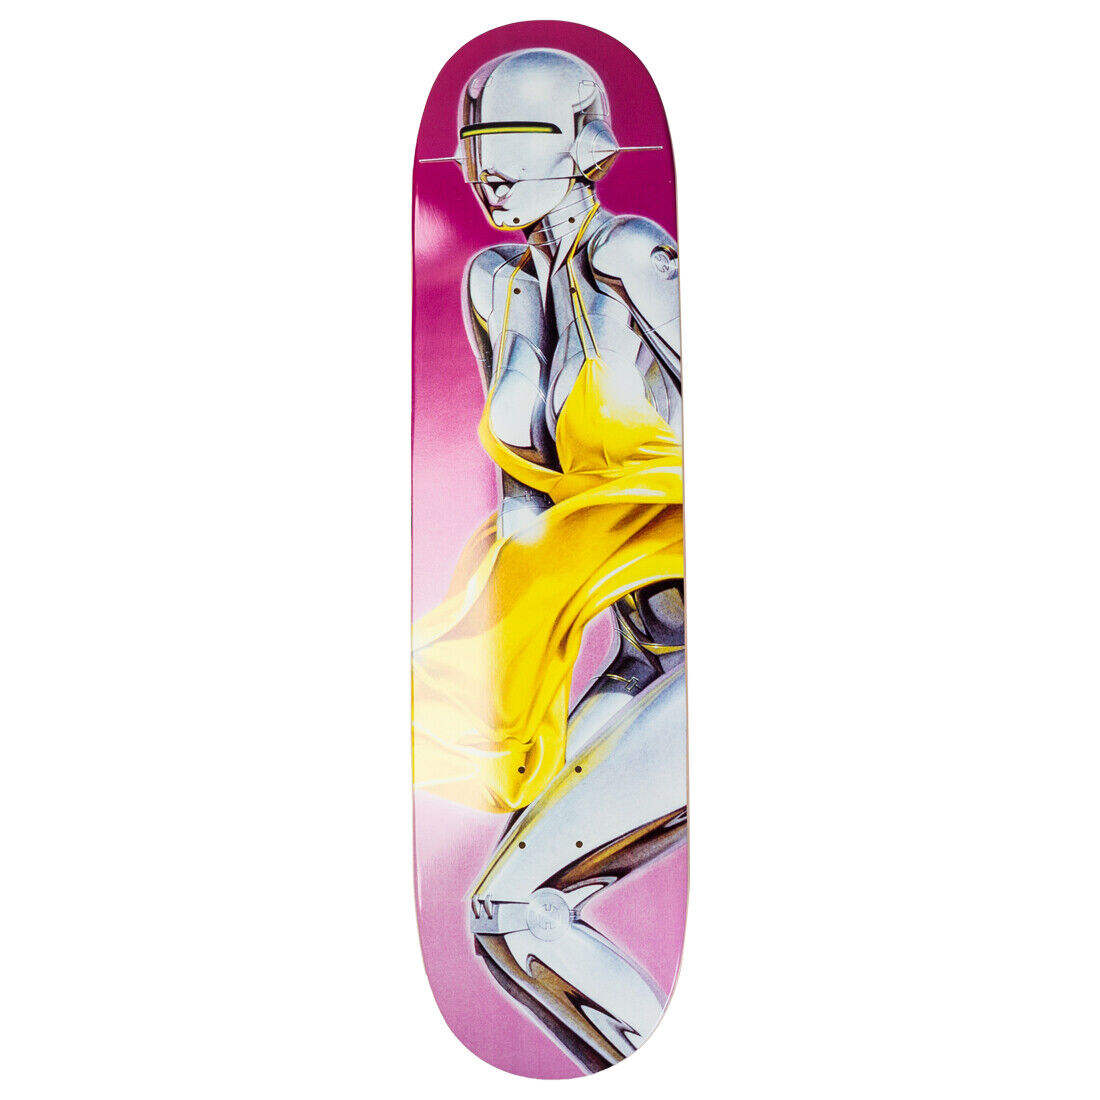 Medicom x SYNC x Hajime Sorayama Men Sexy Robot 03 Skateboard Deck